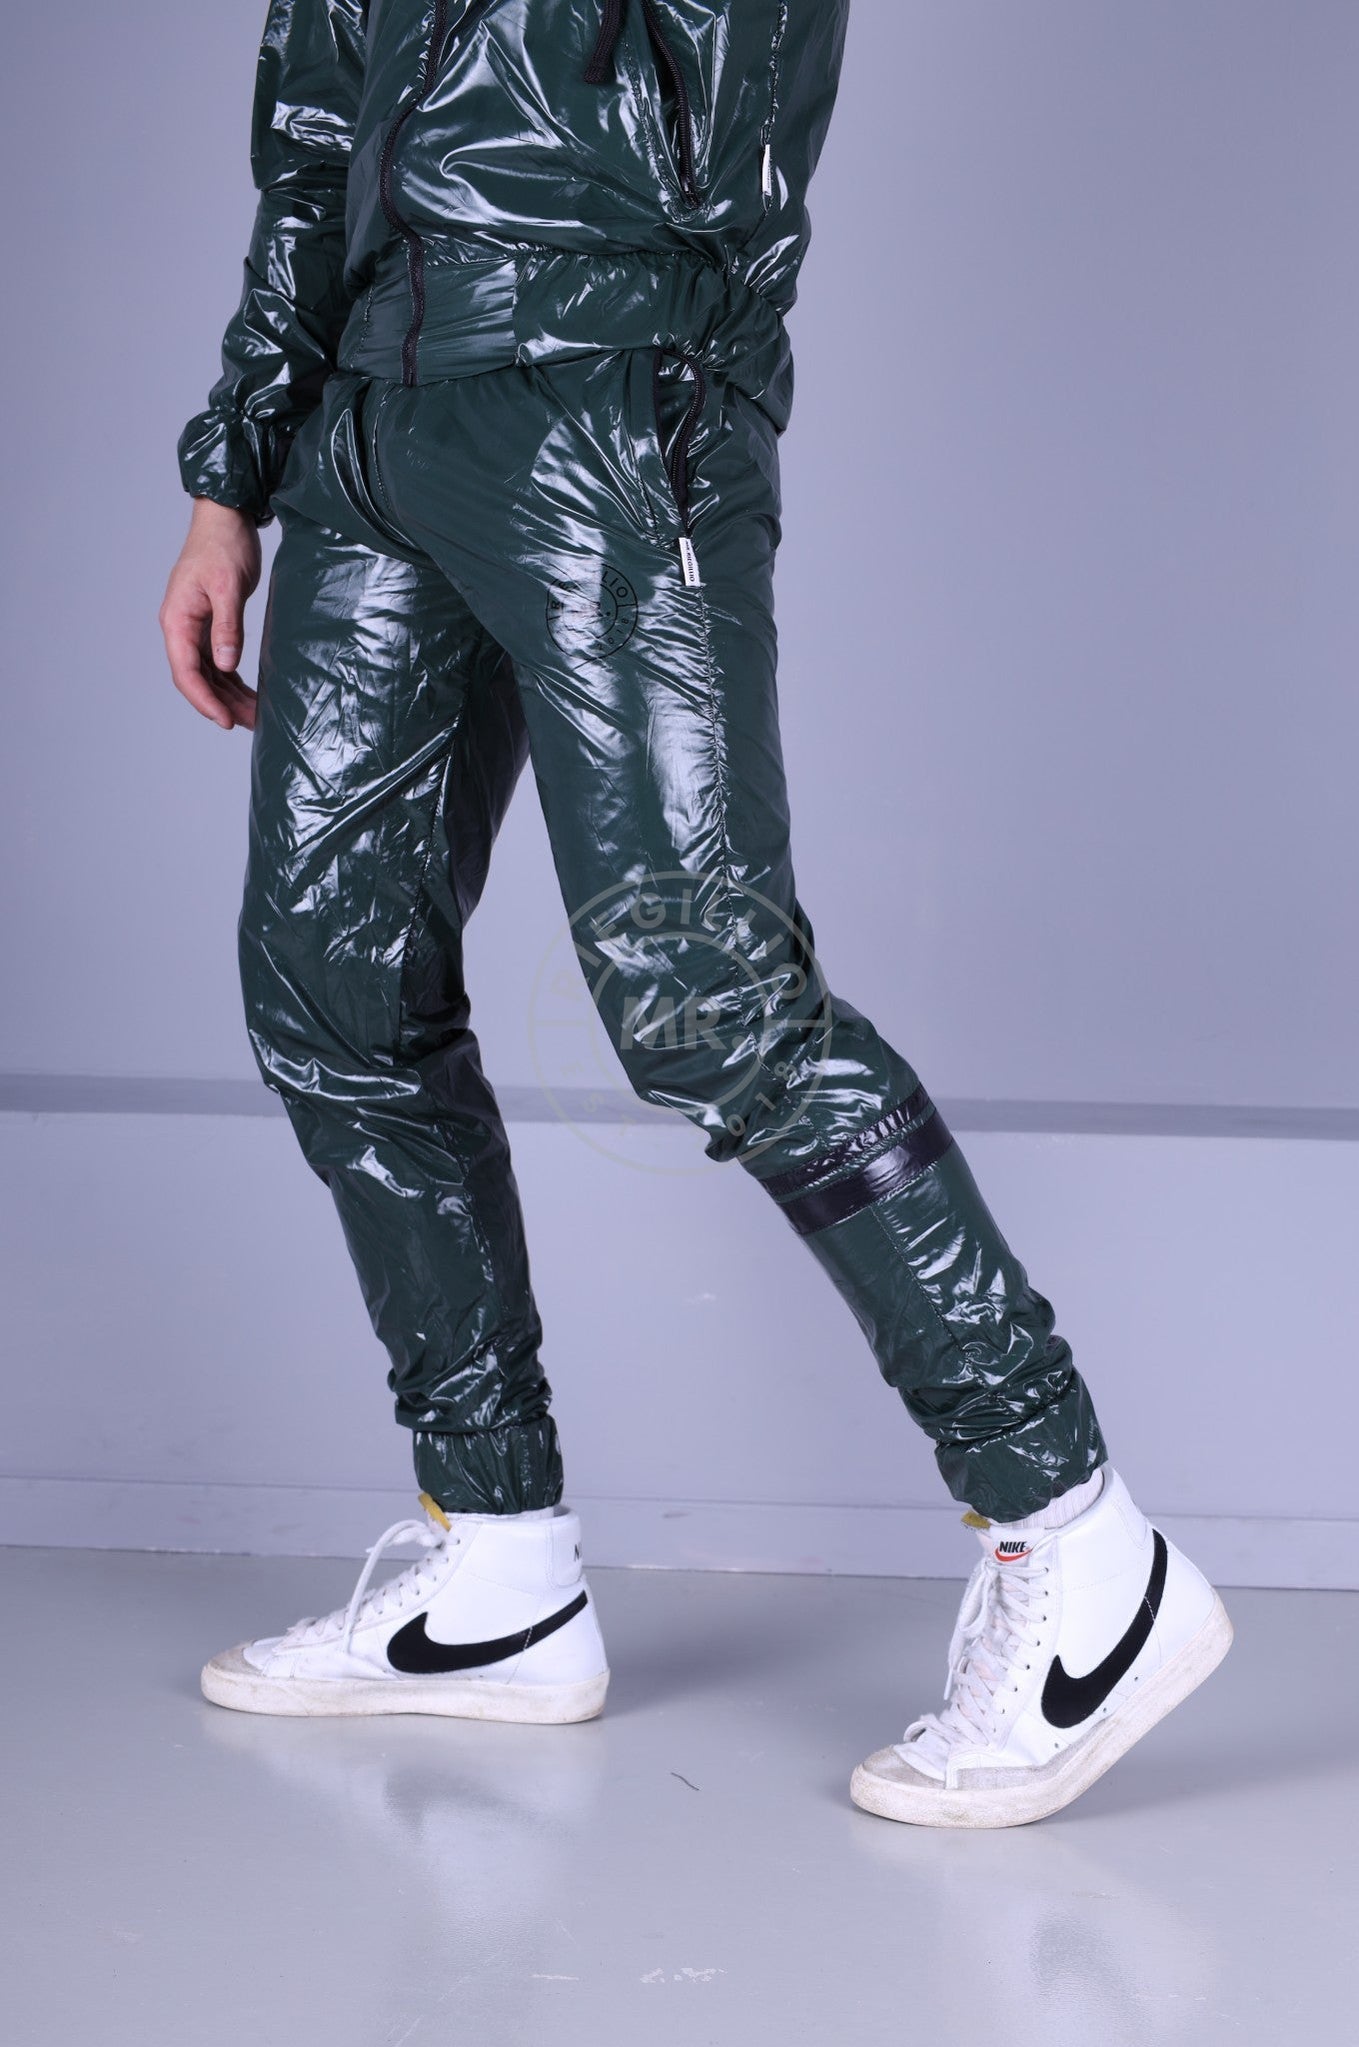 Shiny Nylon Tracksuit Pants - Dark Green by MR. Riegillio